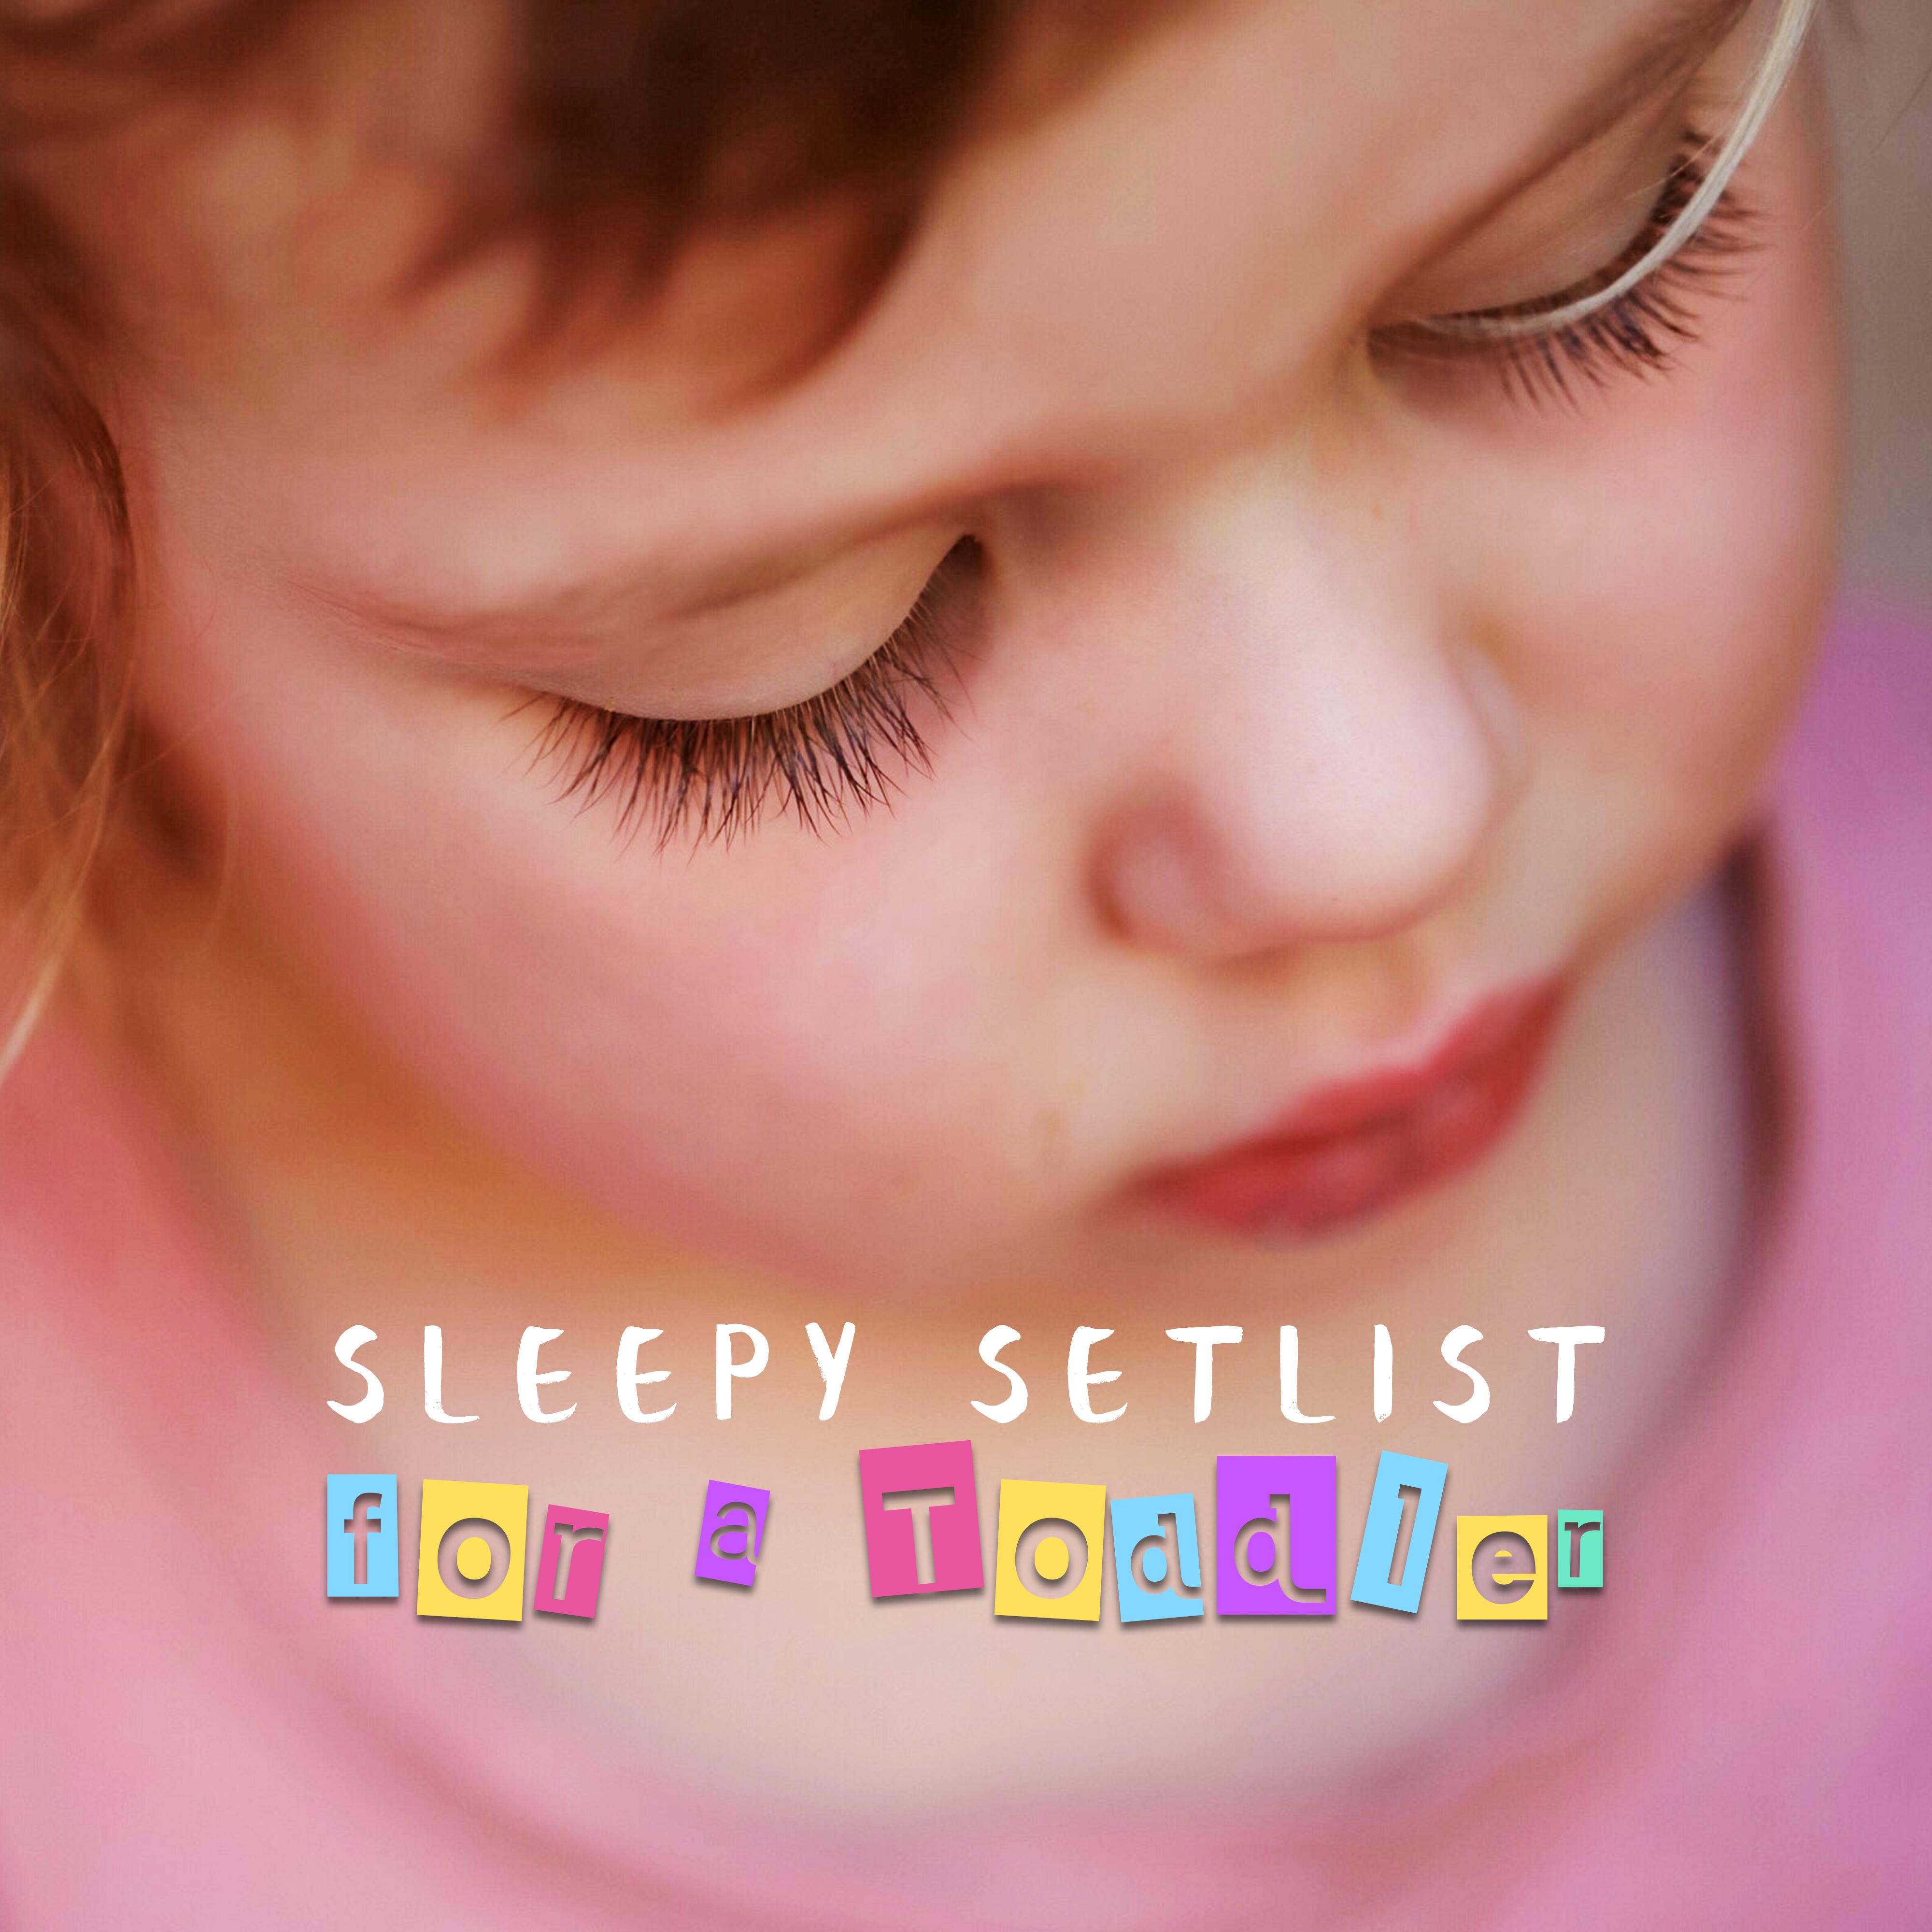 Sleepy Setlist for a Toddler